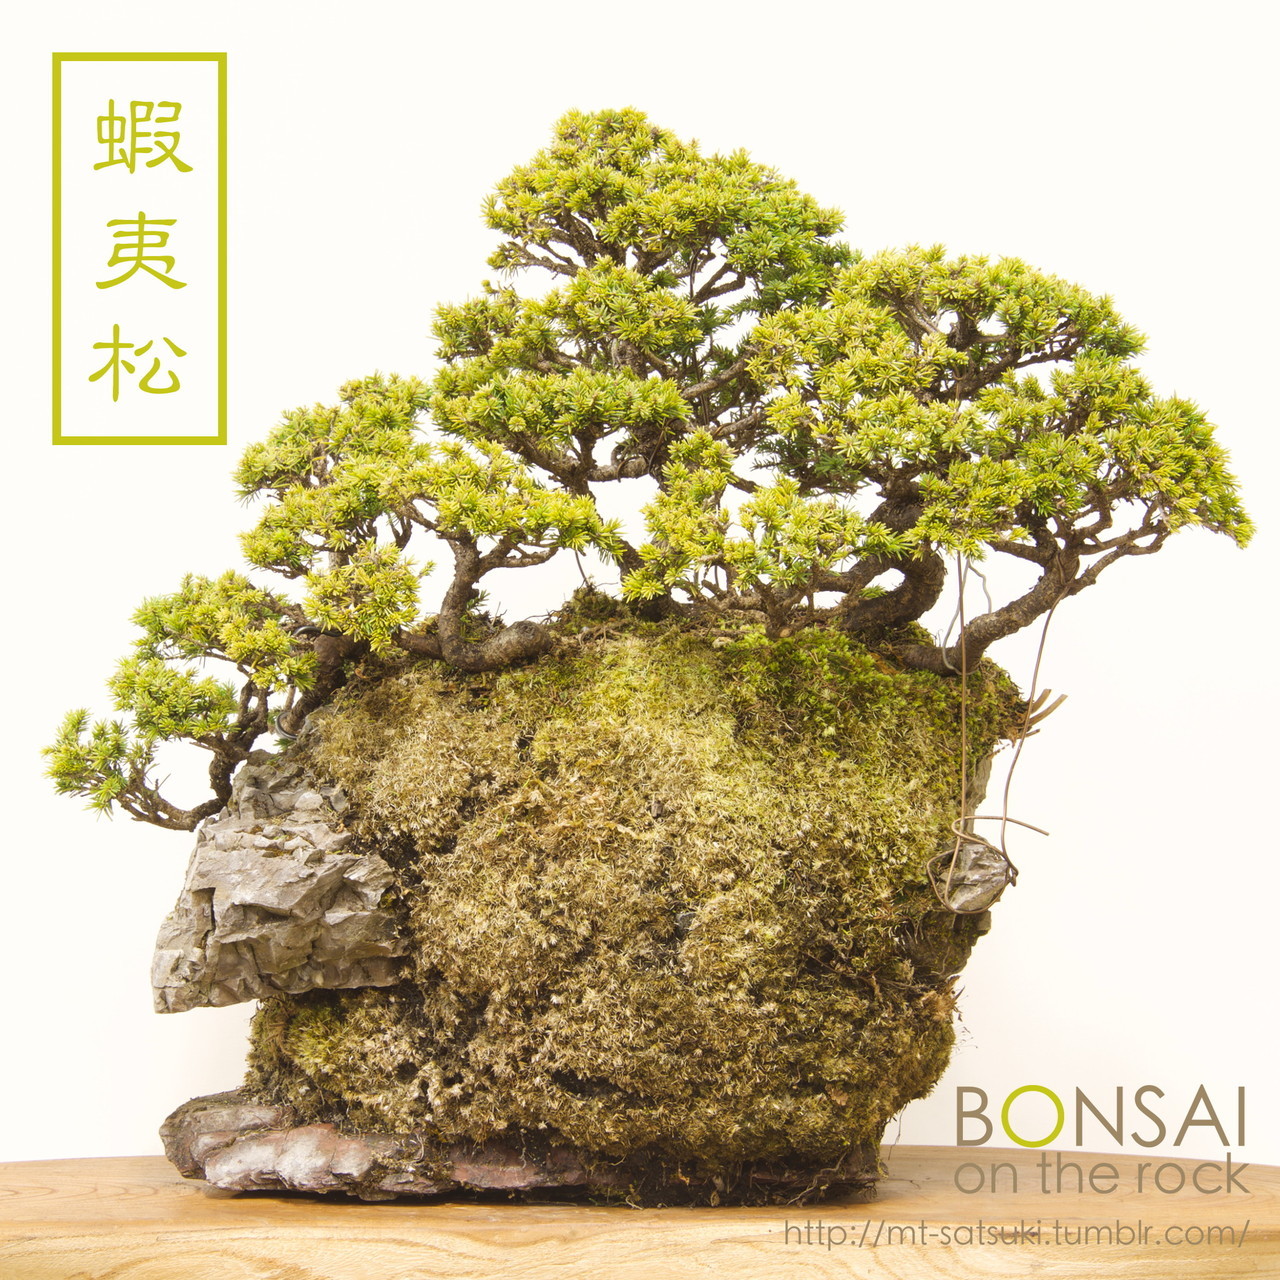 石付盆栽 Bonsai On The Rock 蝦夷松 エゾマツ の石付盆栽 Yezomatsu Yezo Spruce Bonsai On